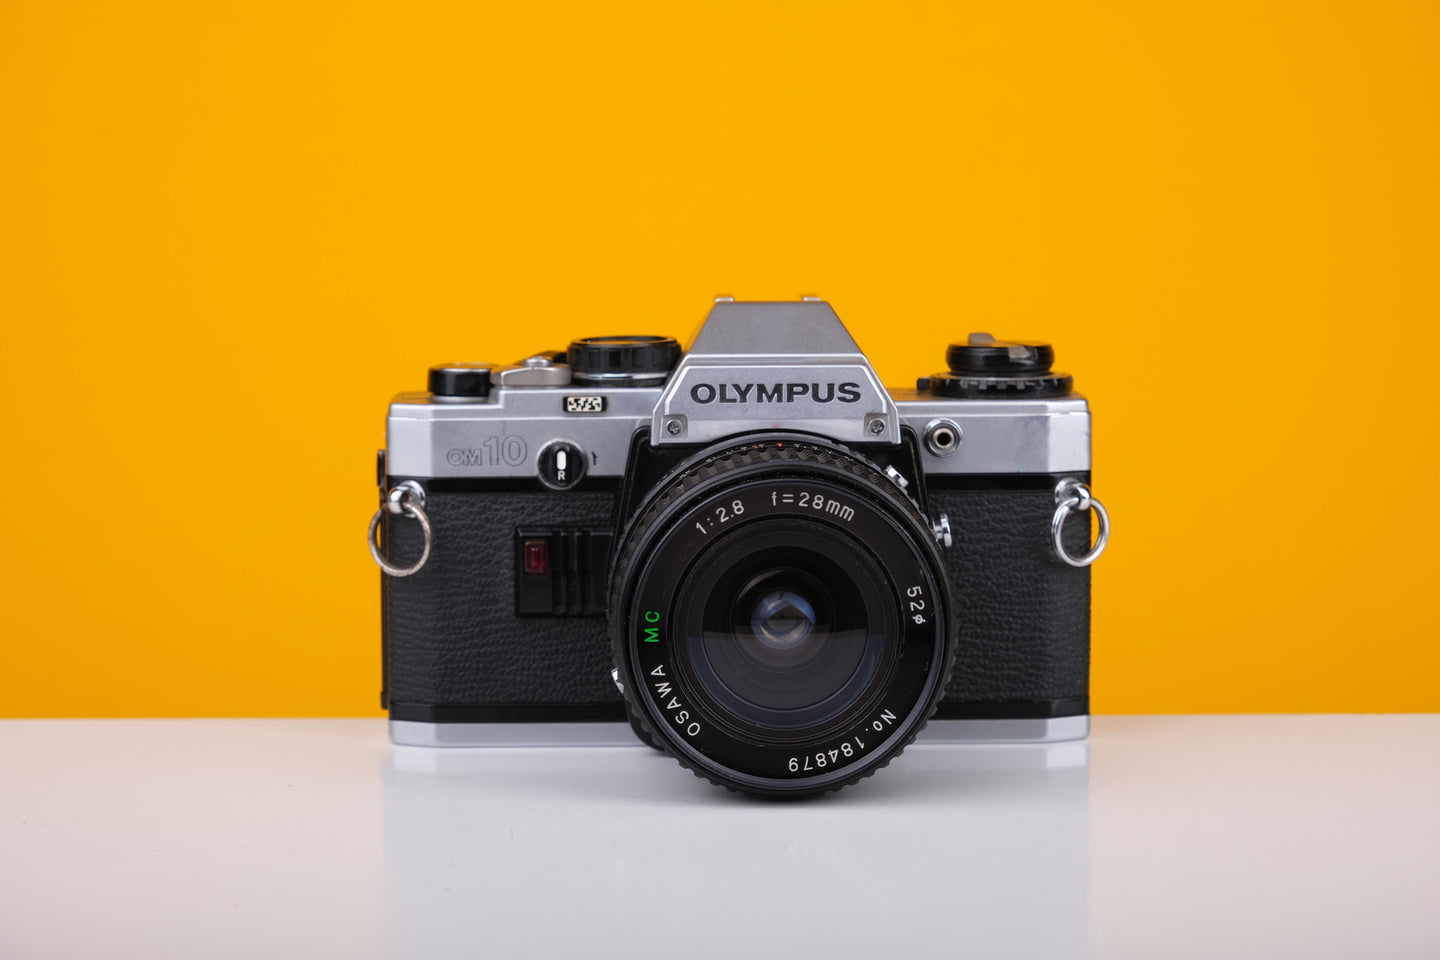 Olympus OM10 35mm SLR Film Camera with Osawa 28mm f2.8 Lens